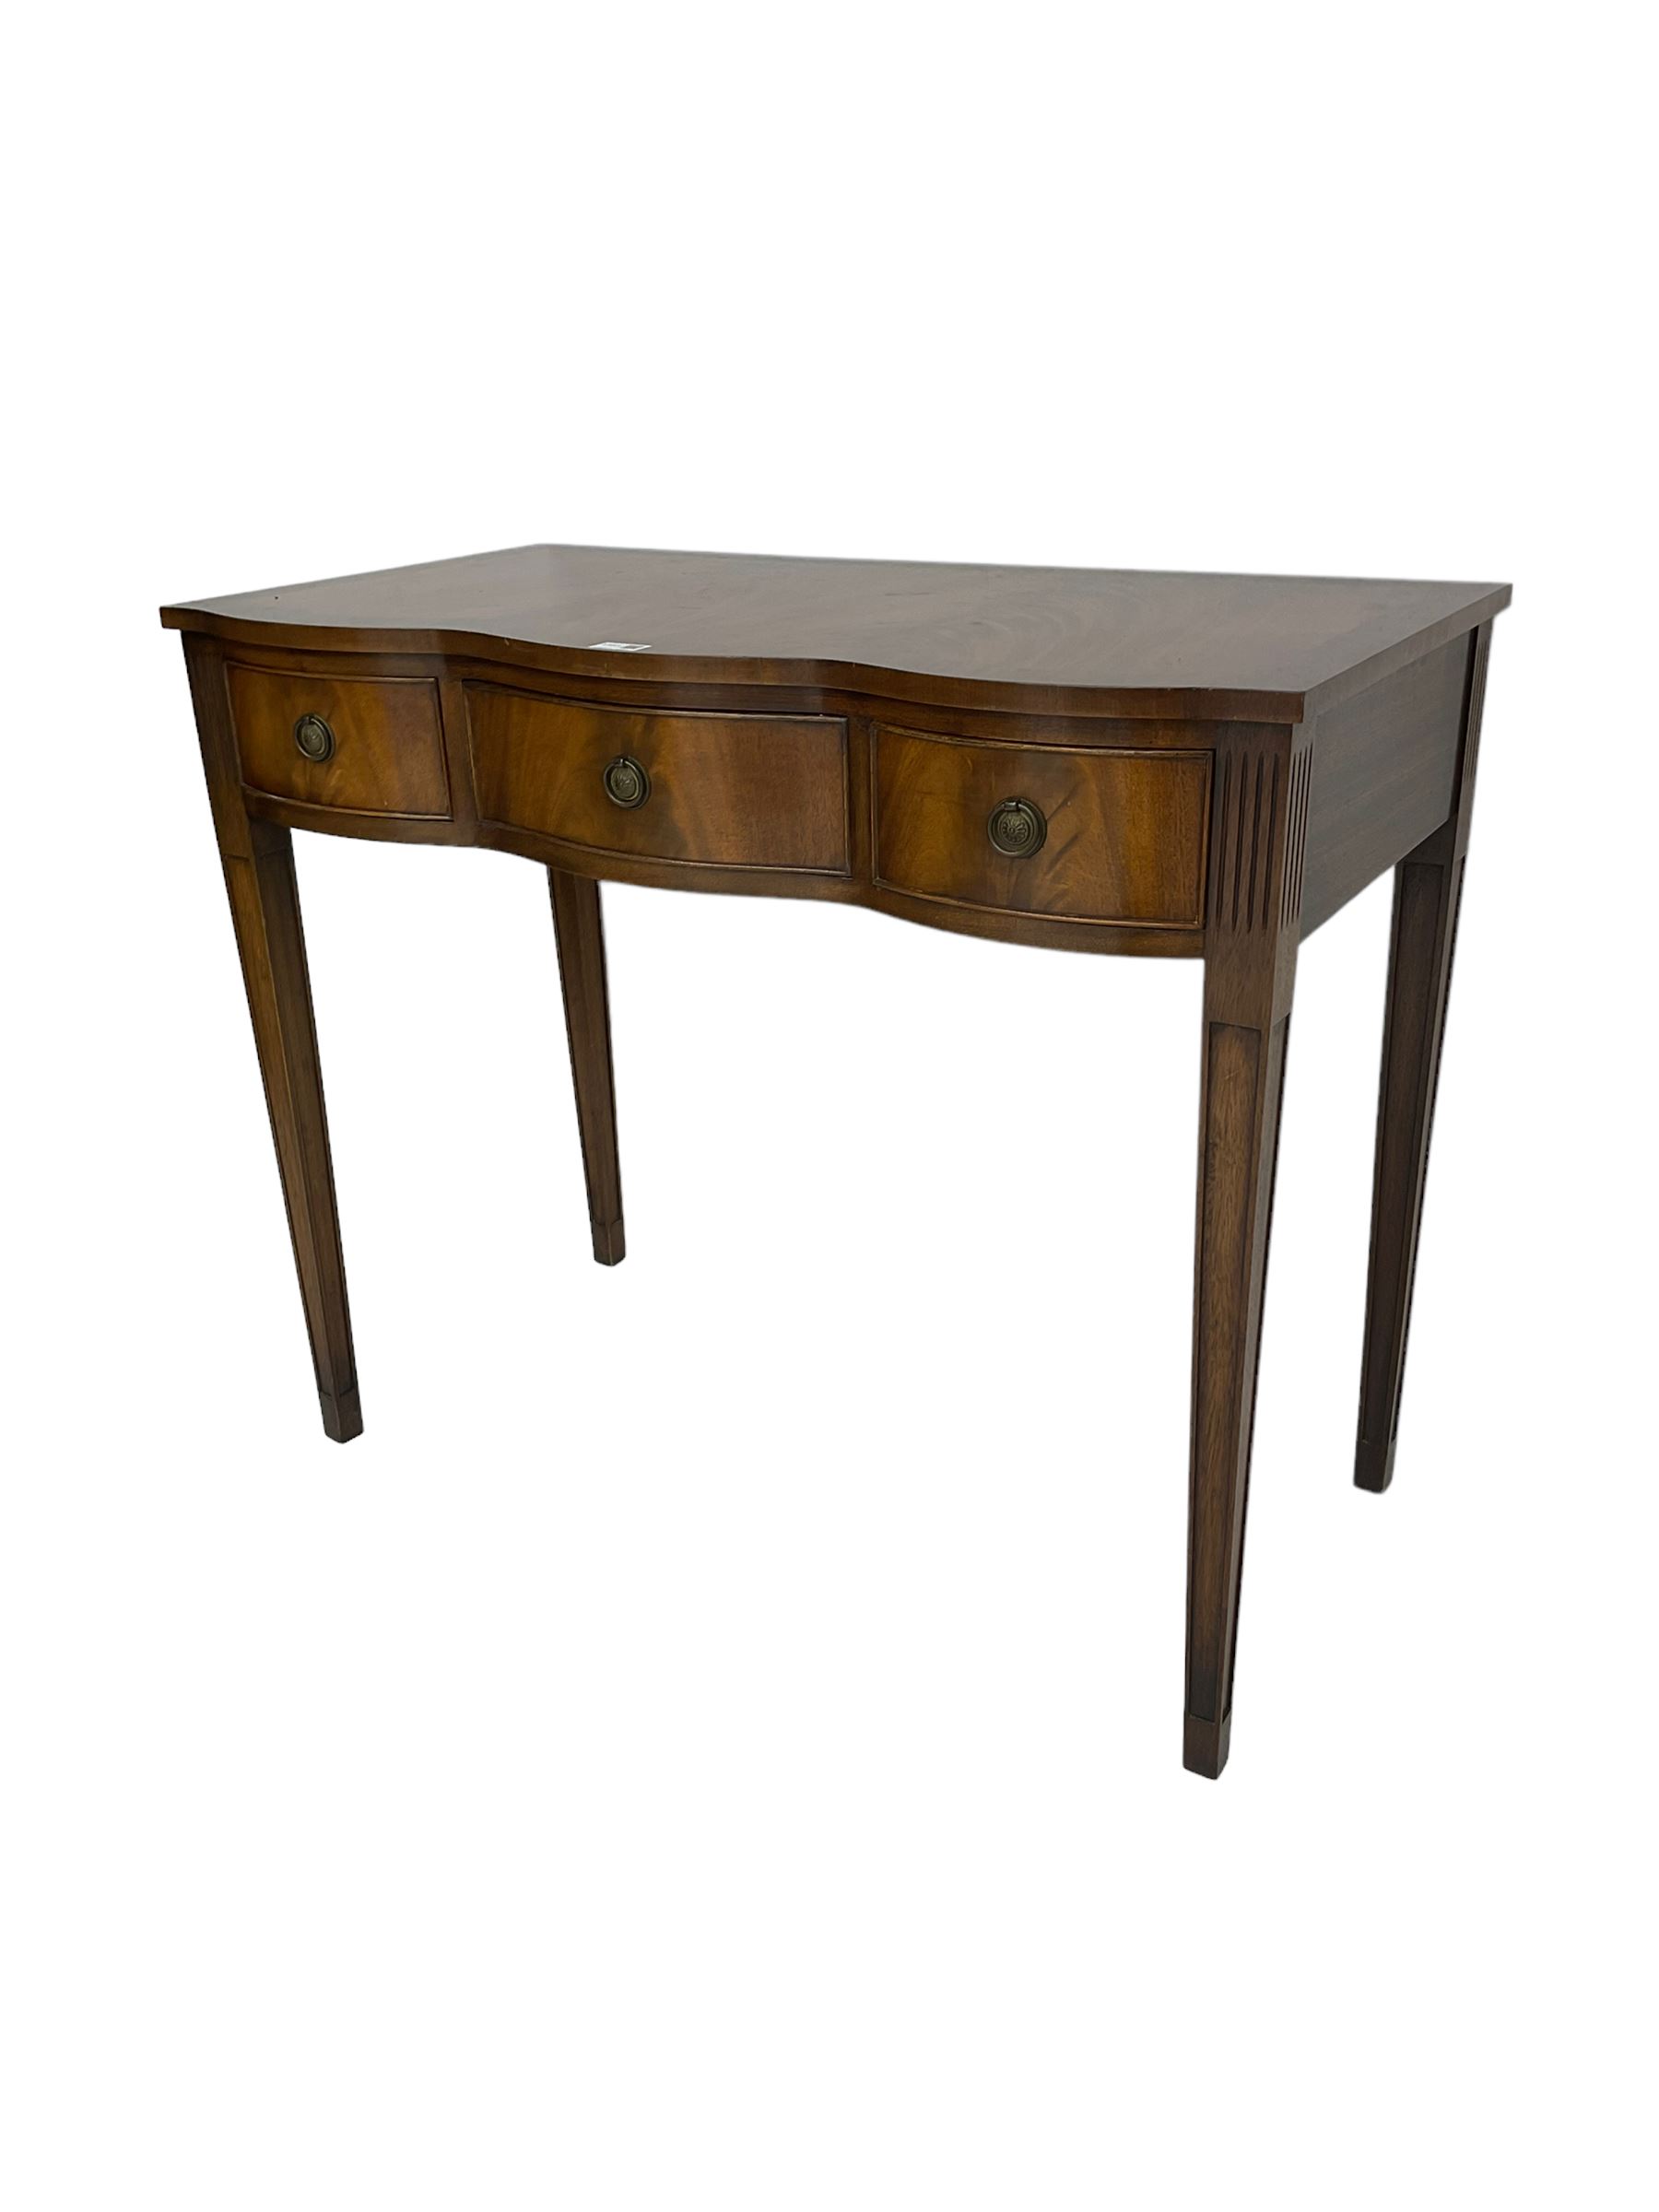 Hunter & Smallpage of York - Georgian design mahogany console table - Image 3 of 6